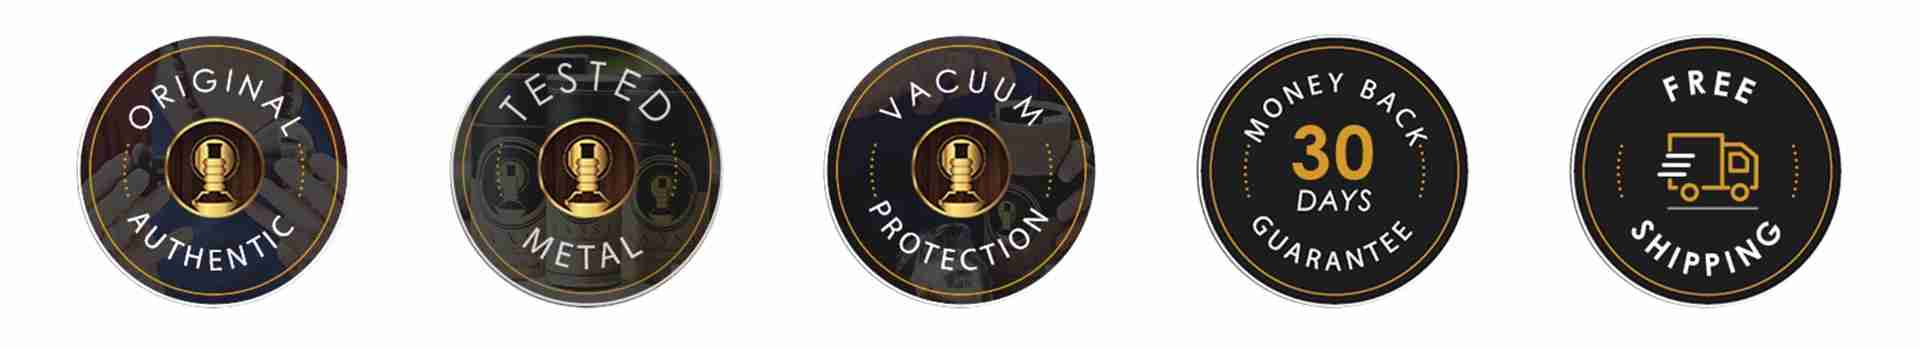 iYURA Trust Badges ensuring 1. Original, Authentic product 2. Tested Metal 3. Vacuum Protection 4. 30-Days Money-back Guarantee & 5. Free Shipping